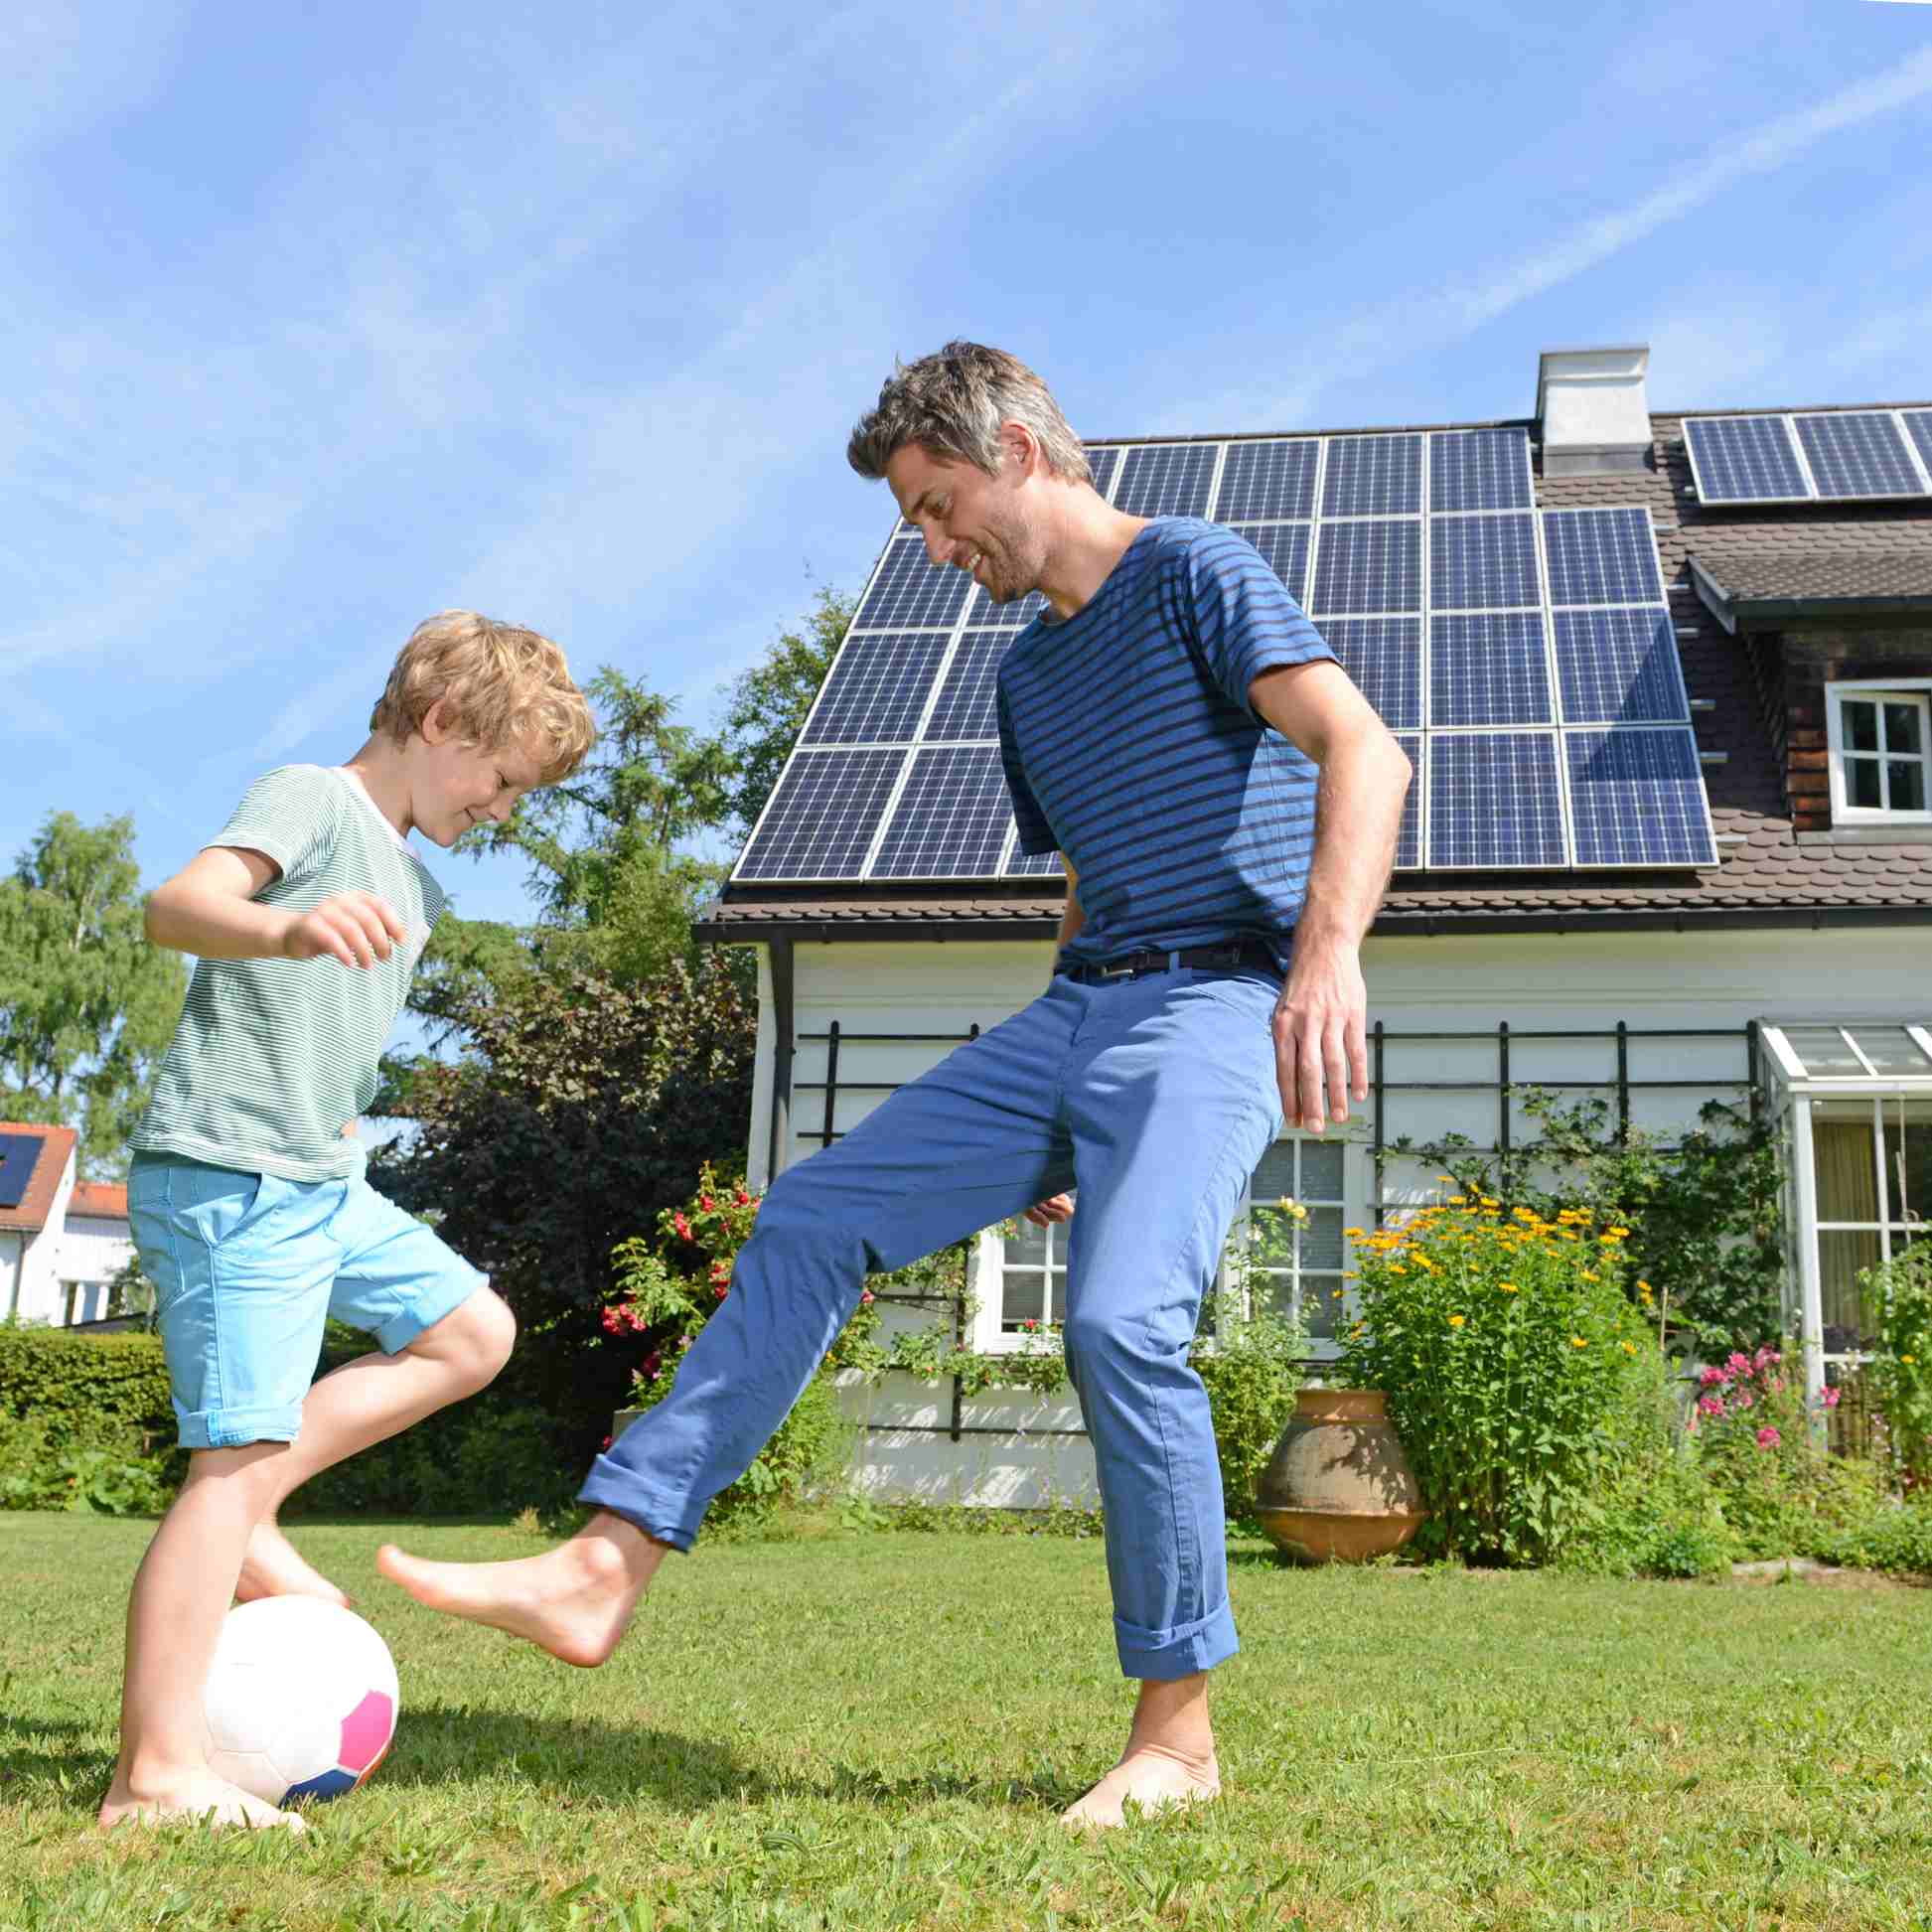 Father and son playing football in garden of solar paneled house virginia beach va